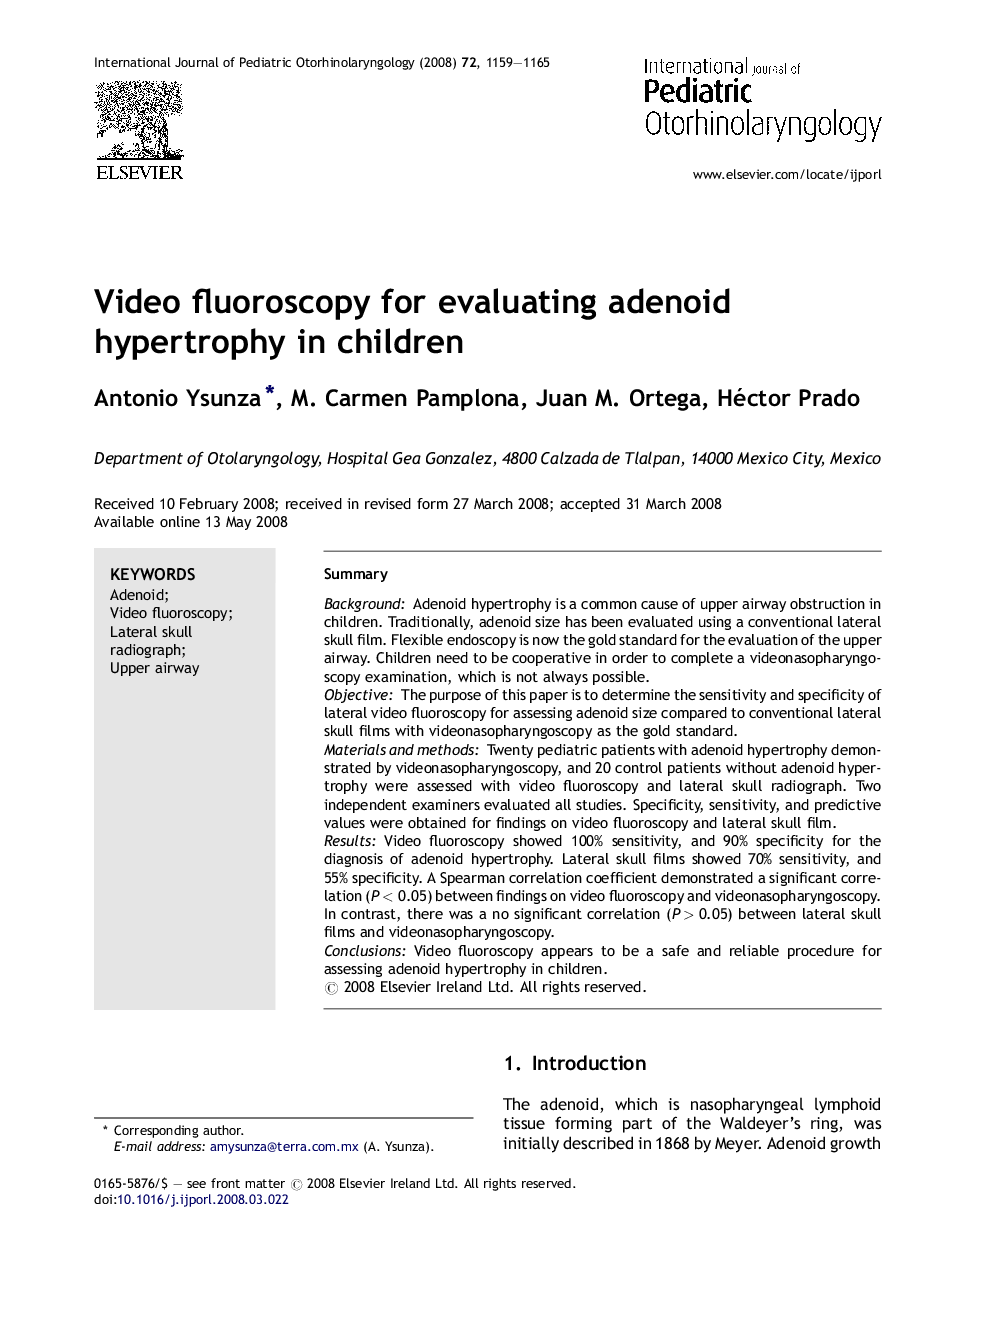 Video fluoroscopy for evaluating adenoid hypertrophy in children